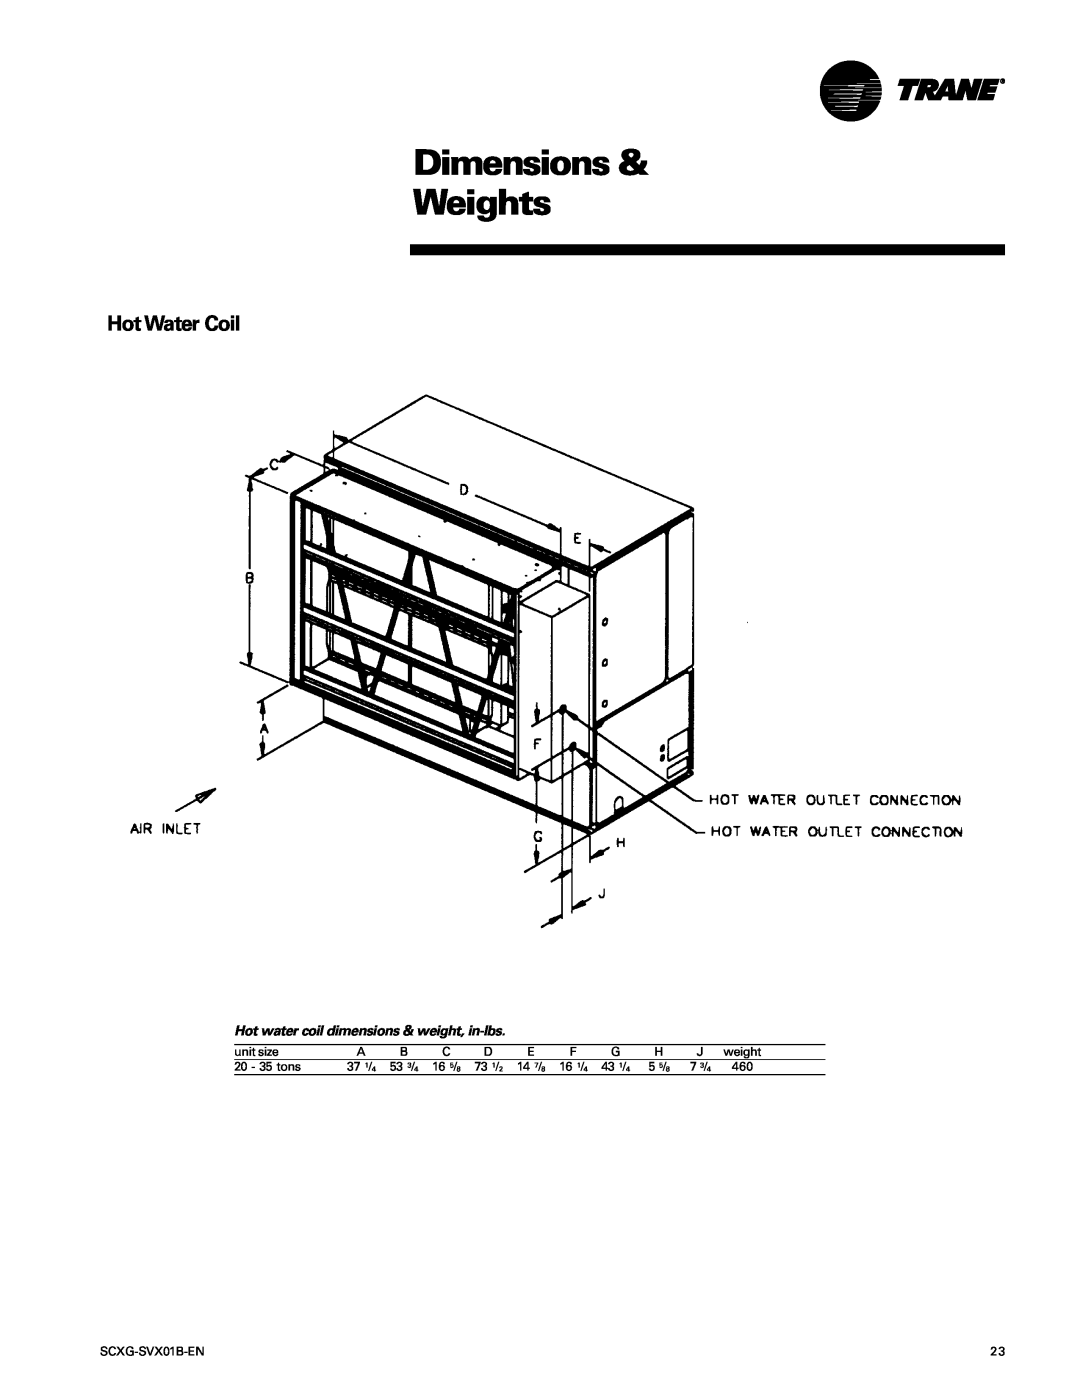 Trane SCXG-SVX01B-EN manual Hot Water Coil, Dimensions & Weights, Hot water coil dimensions & weight, in-lbs 